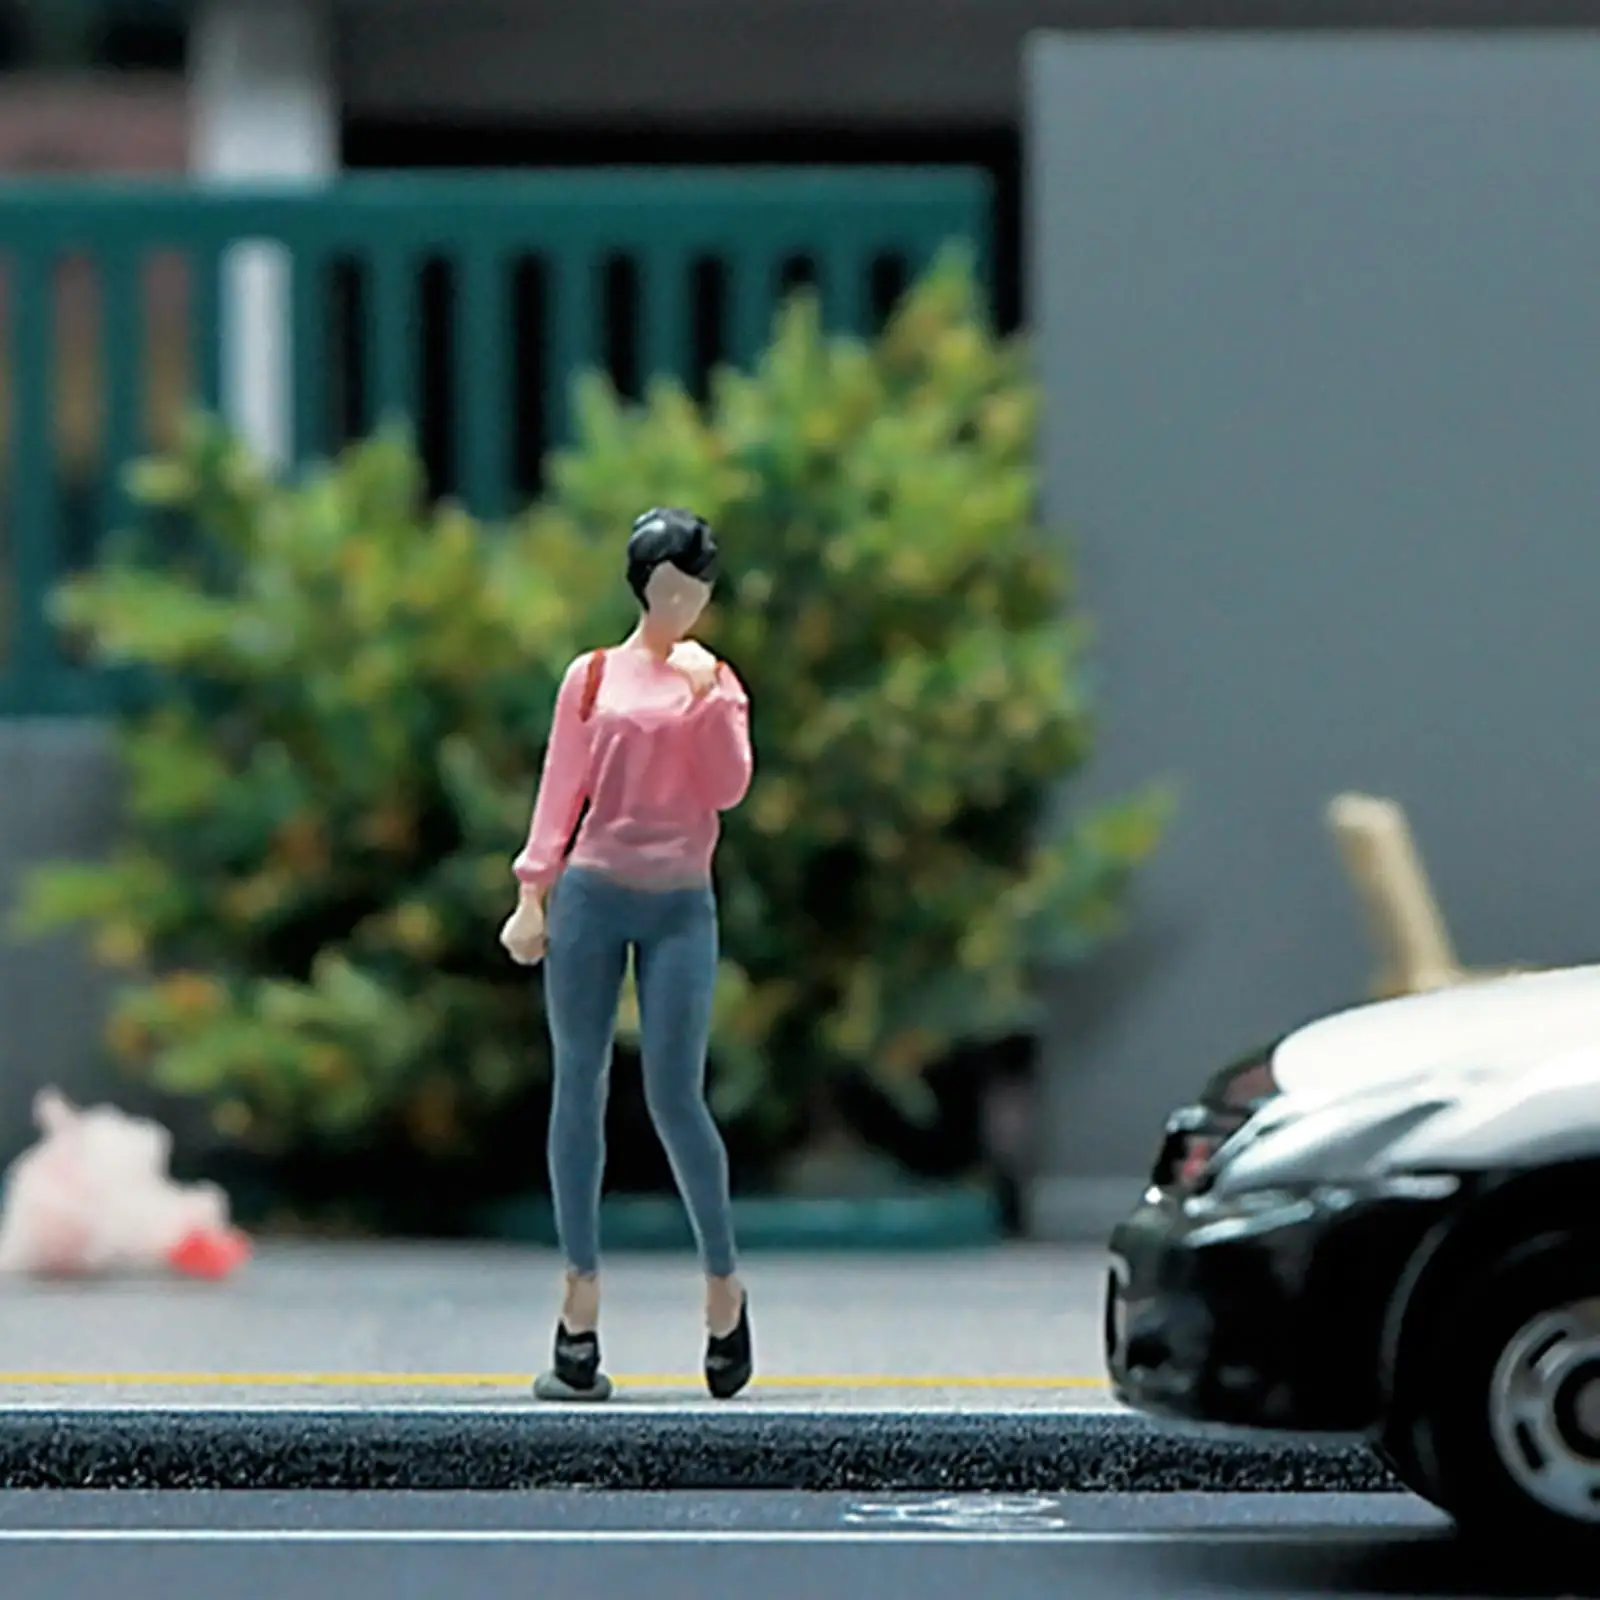 1/64 Scale Model Figures for Micro Landscapes Decor Desktop Ornament DIY Scene Decor Dollhouse Decor DIY Projects Accessory